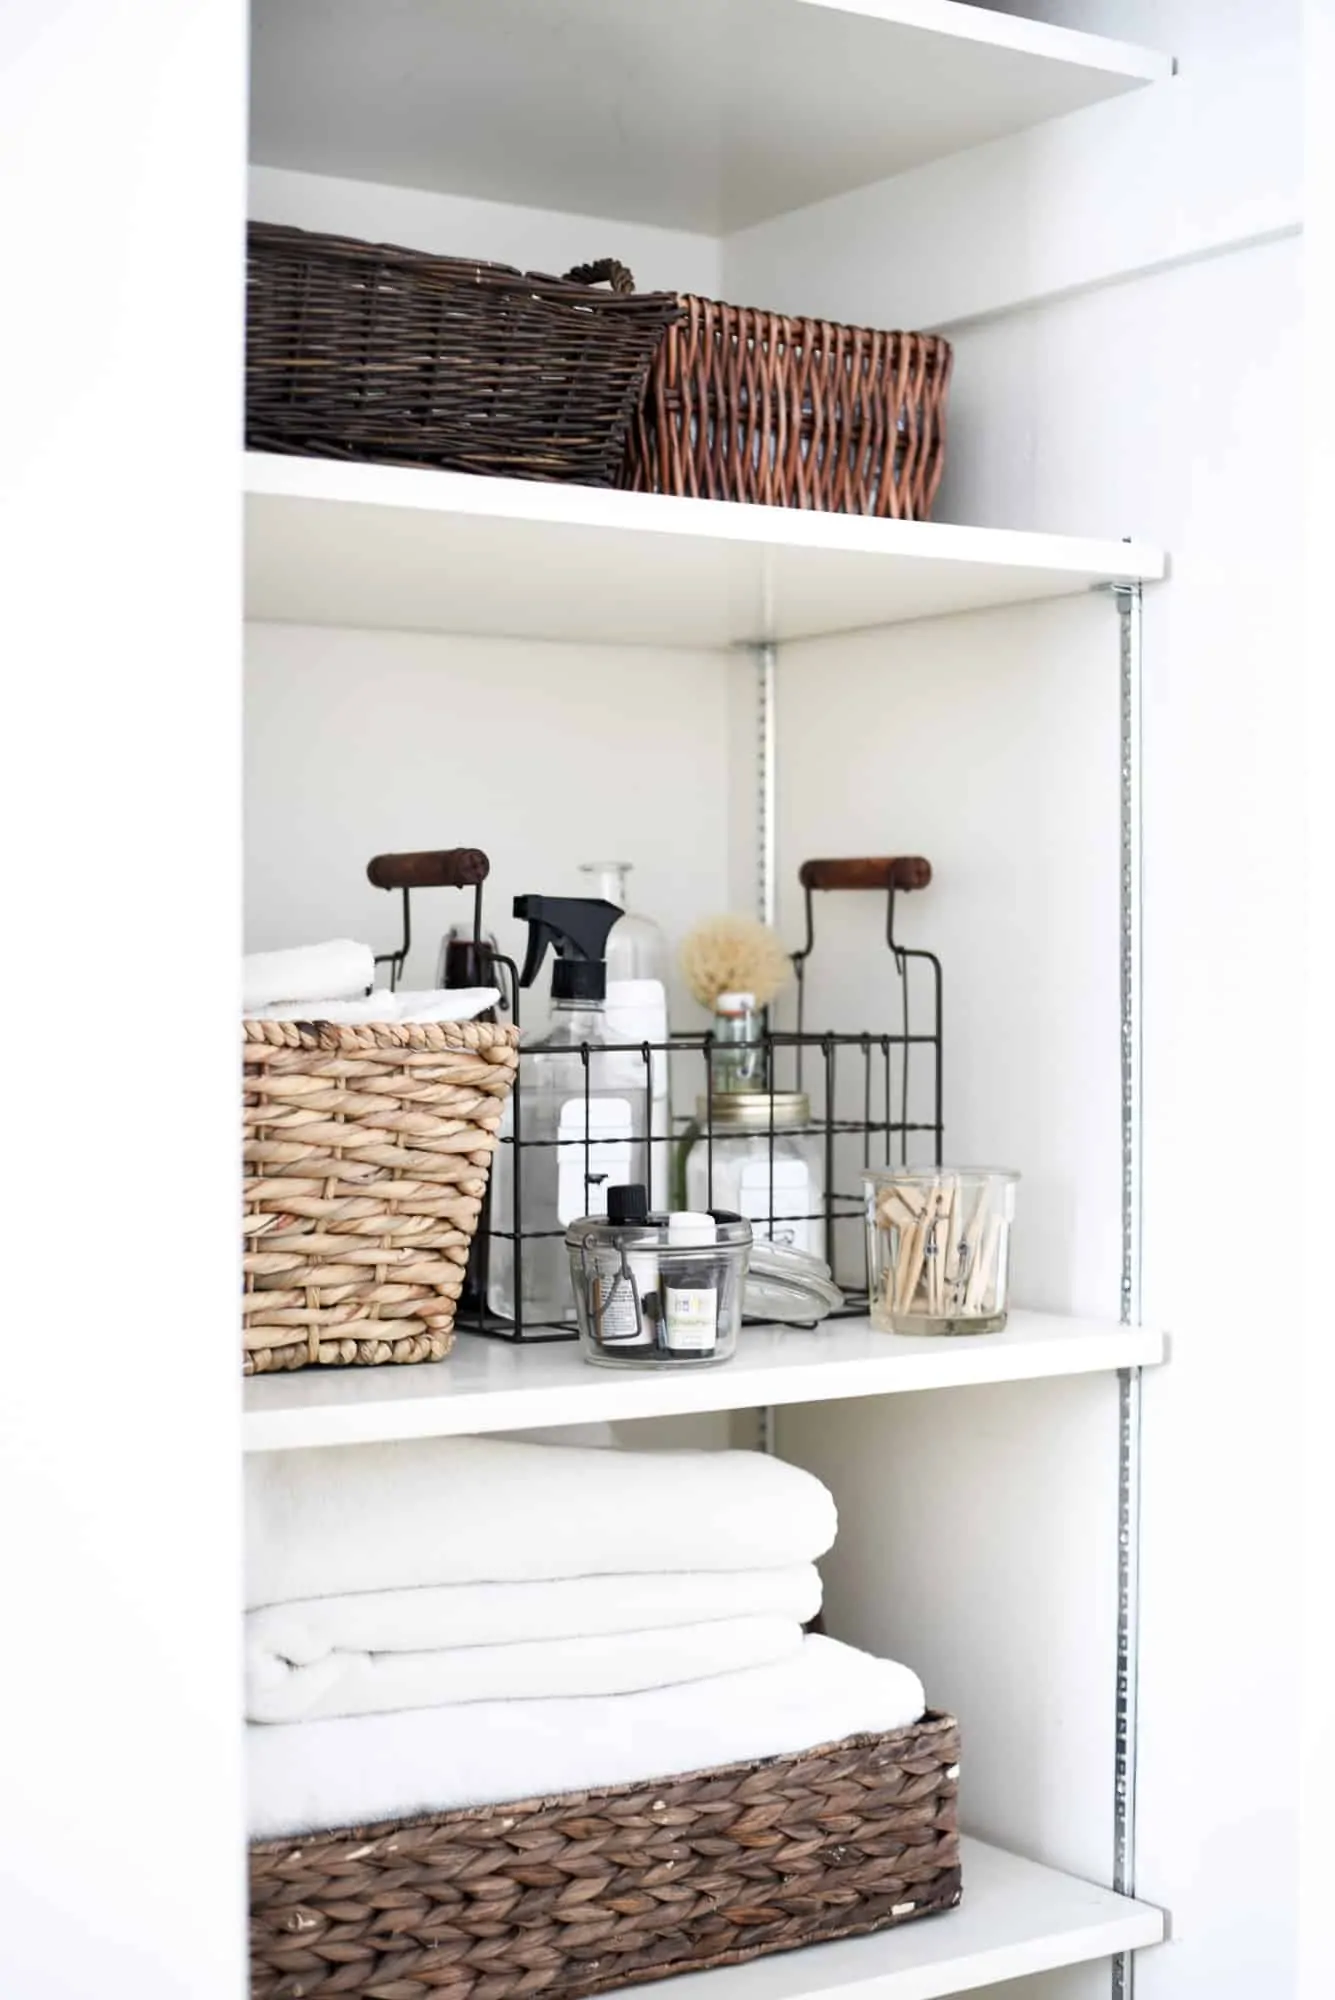 use baskets for closet organization